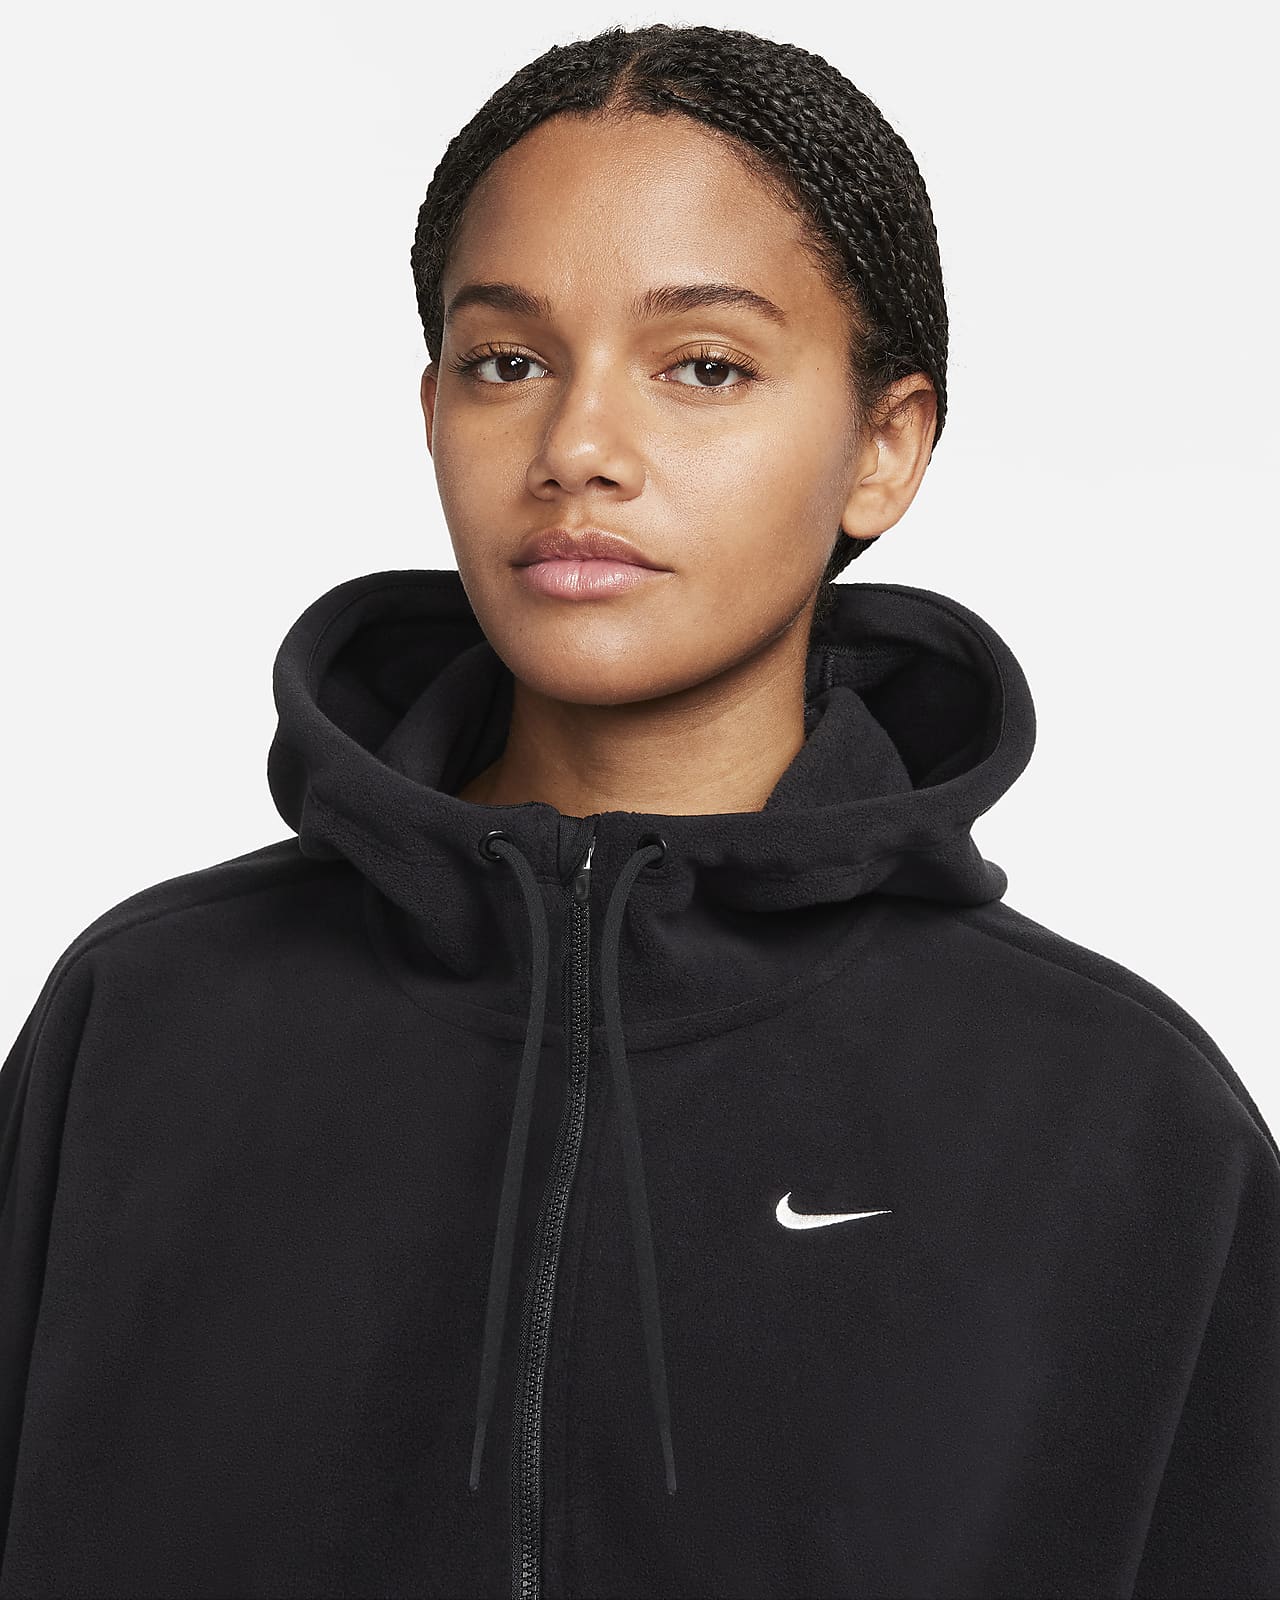 Nike Swoosh fleece sweatshirt in black